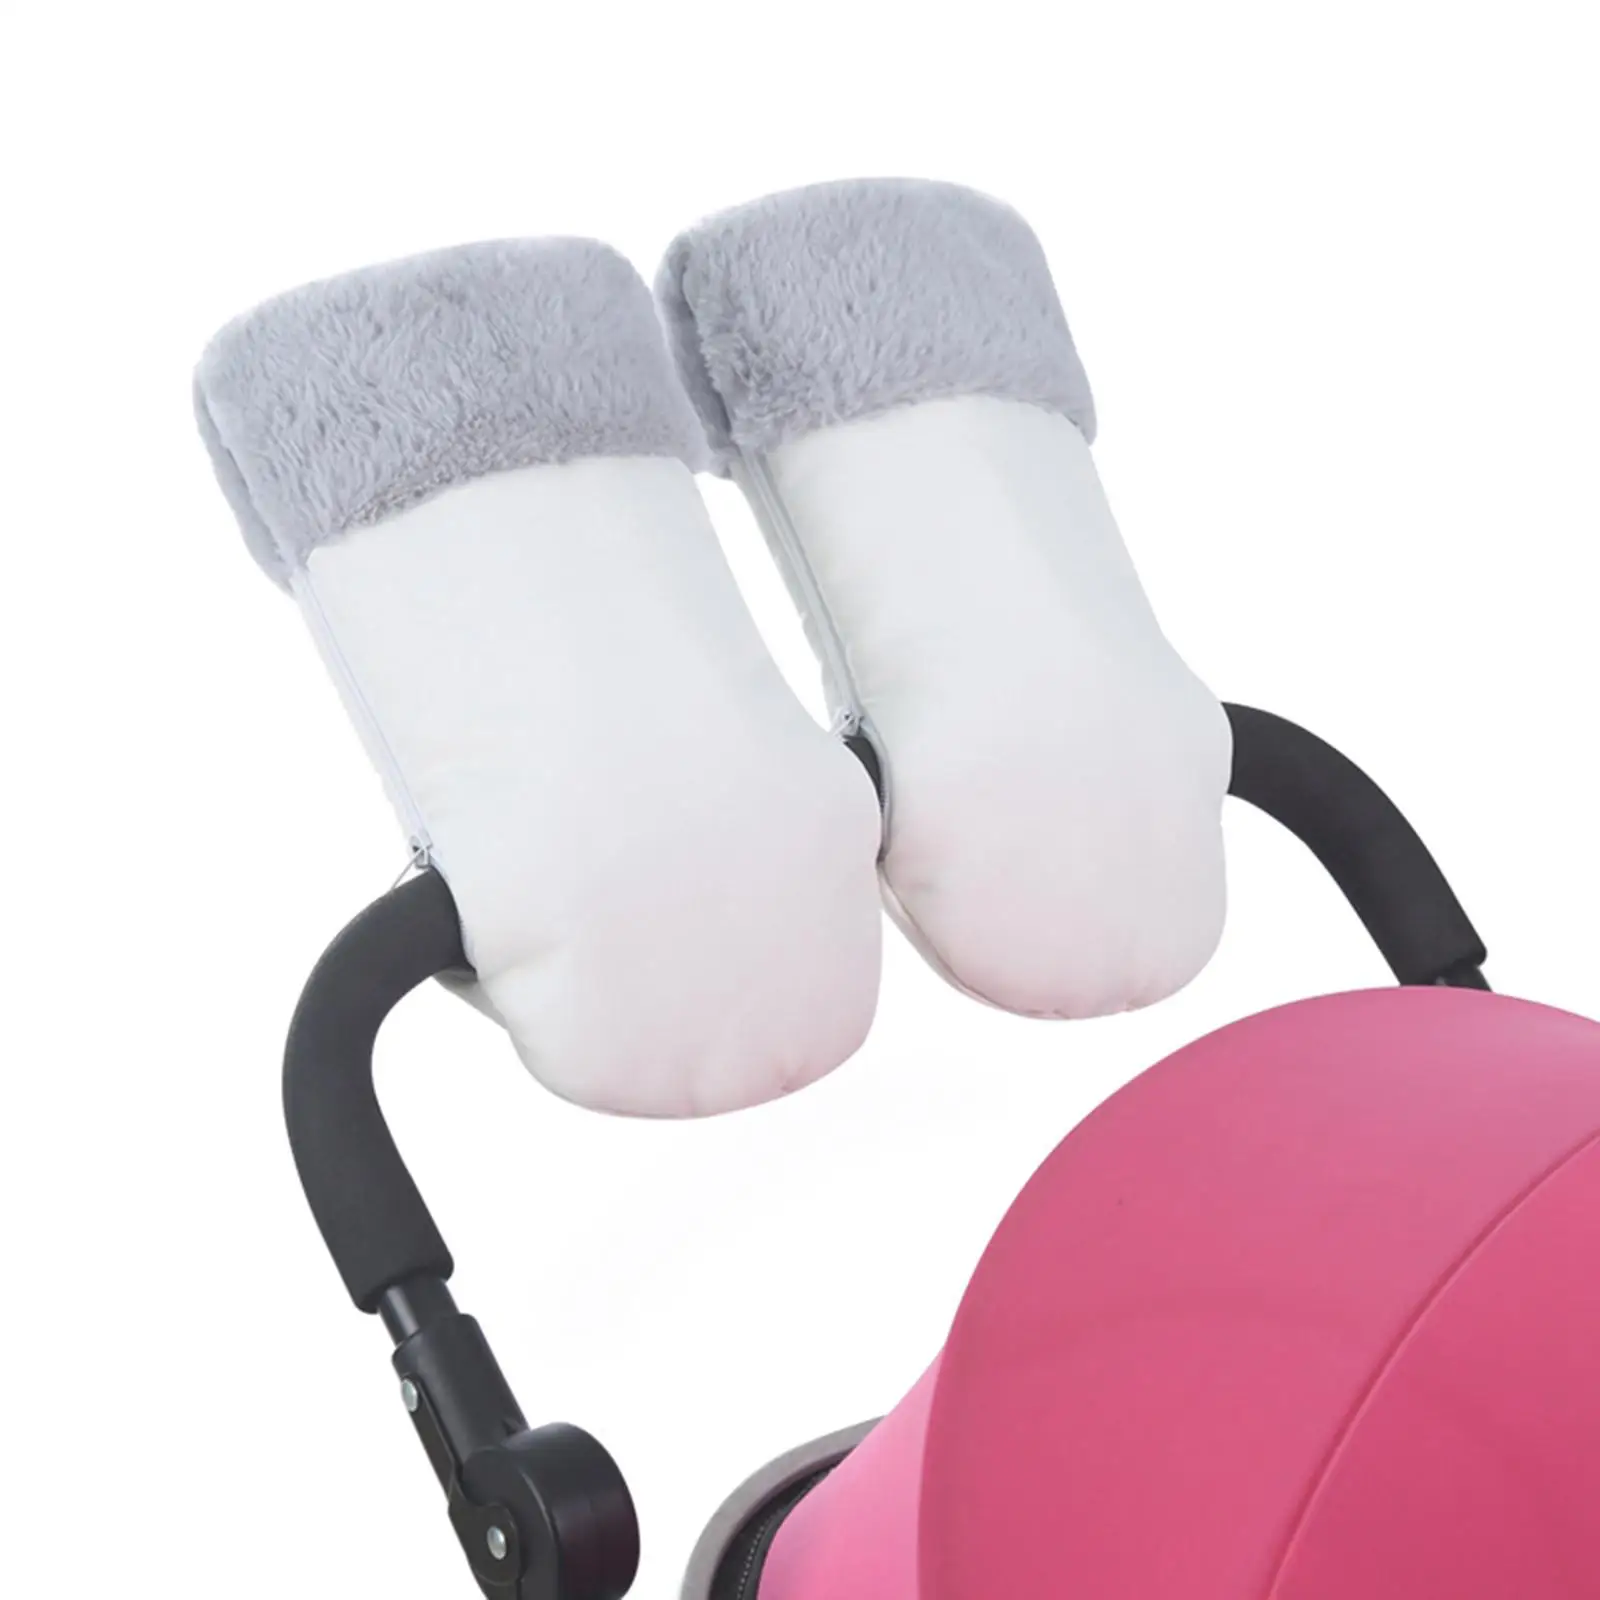 2 Pieces Stroller Gloves Pram Handmuff Thick Stroller Accessories Portable Windproof for Golf Cart Pram Pet Gears Pushchair